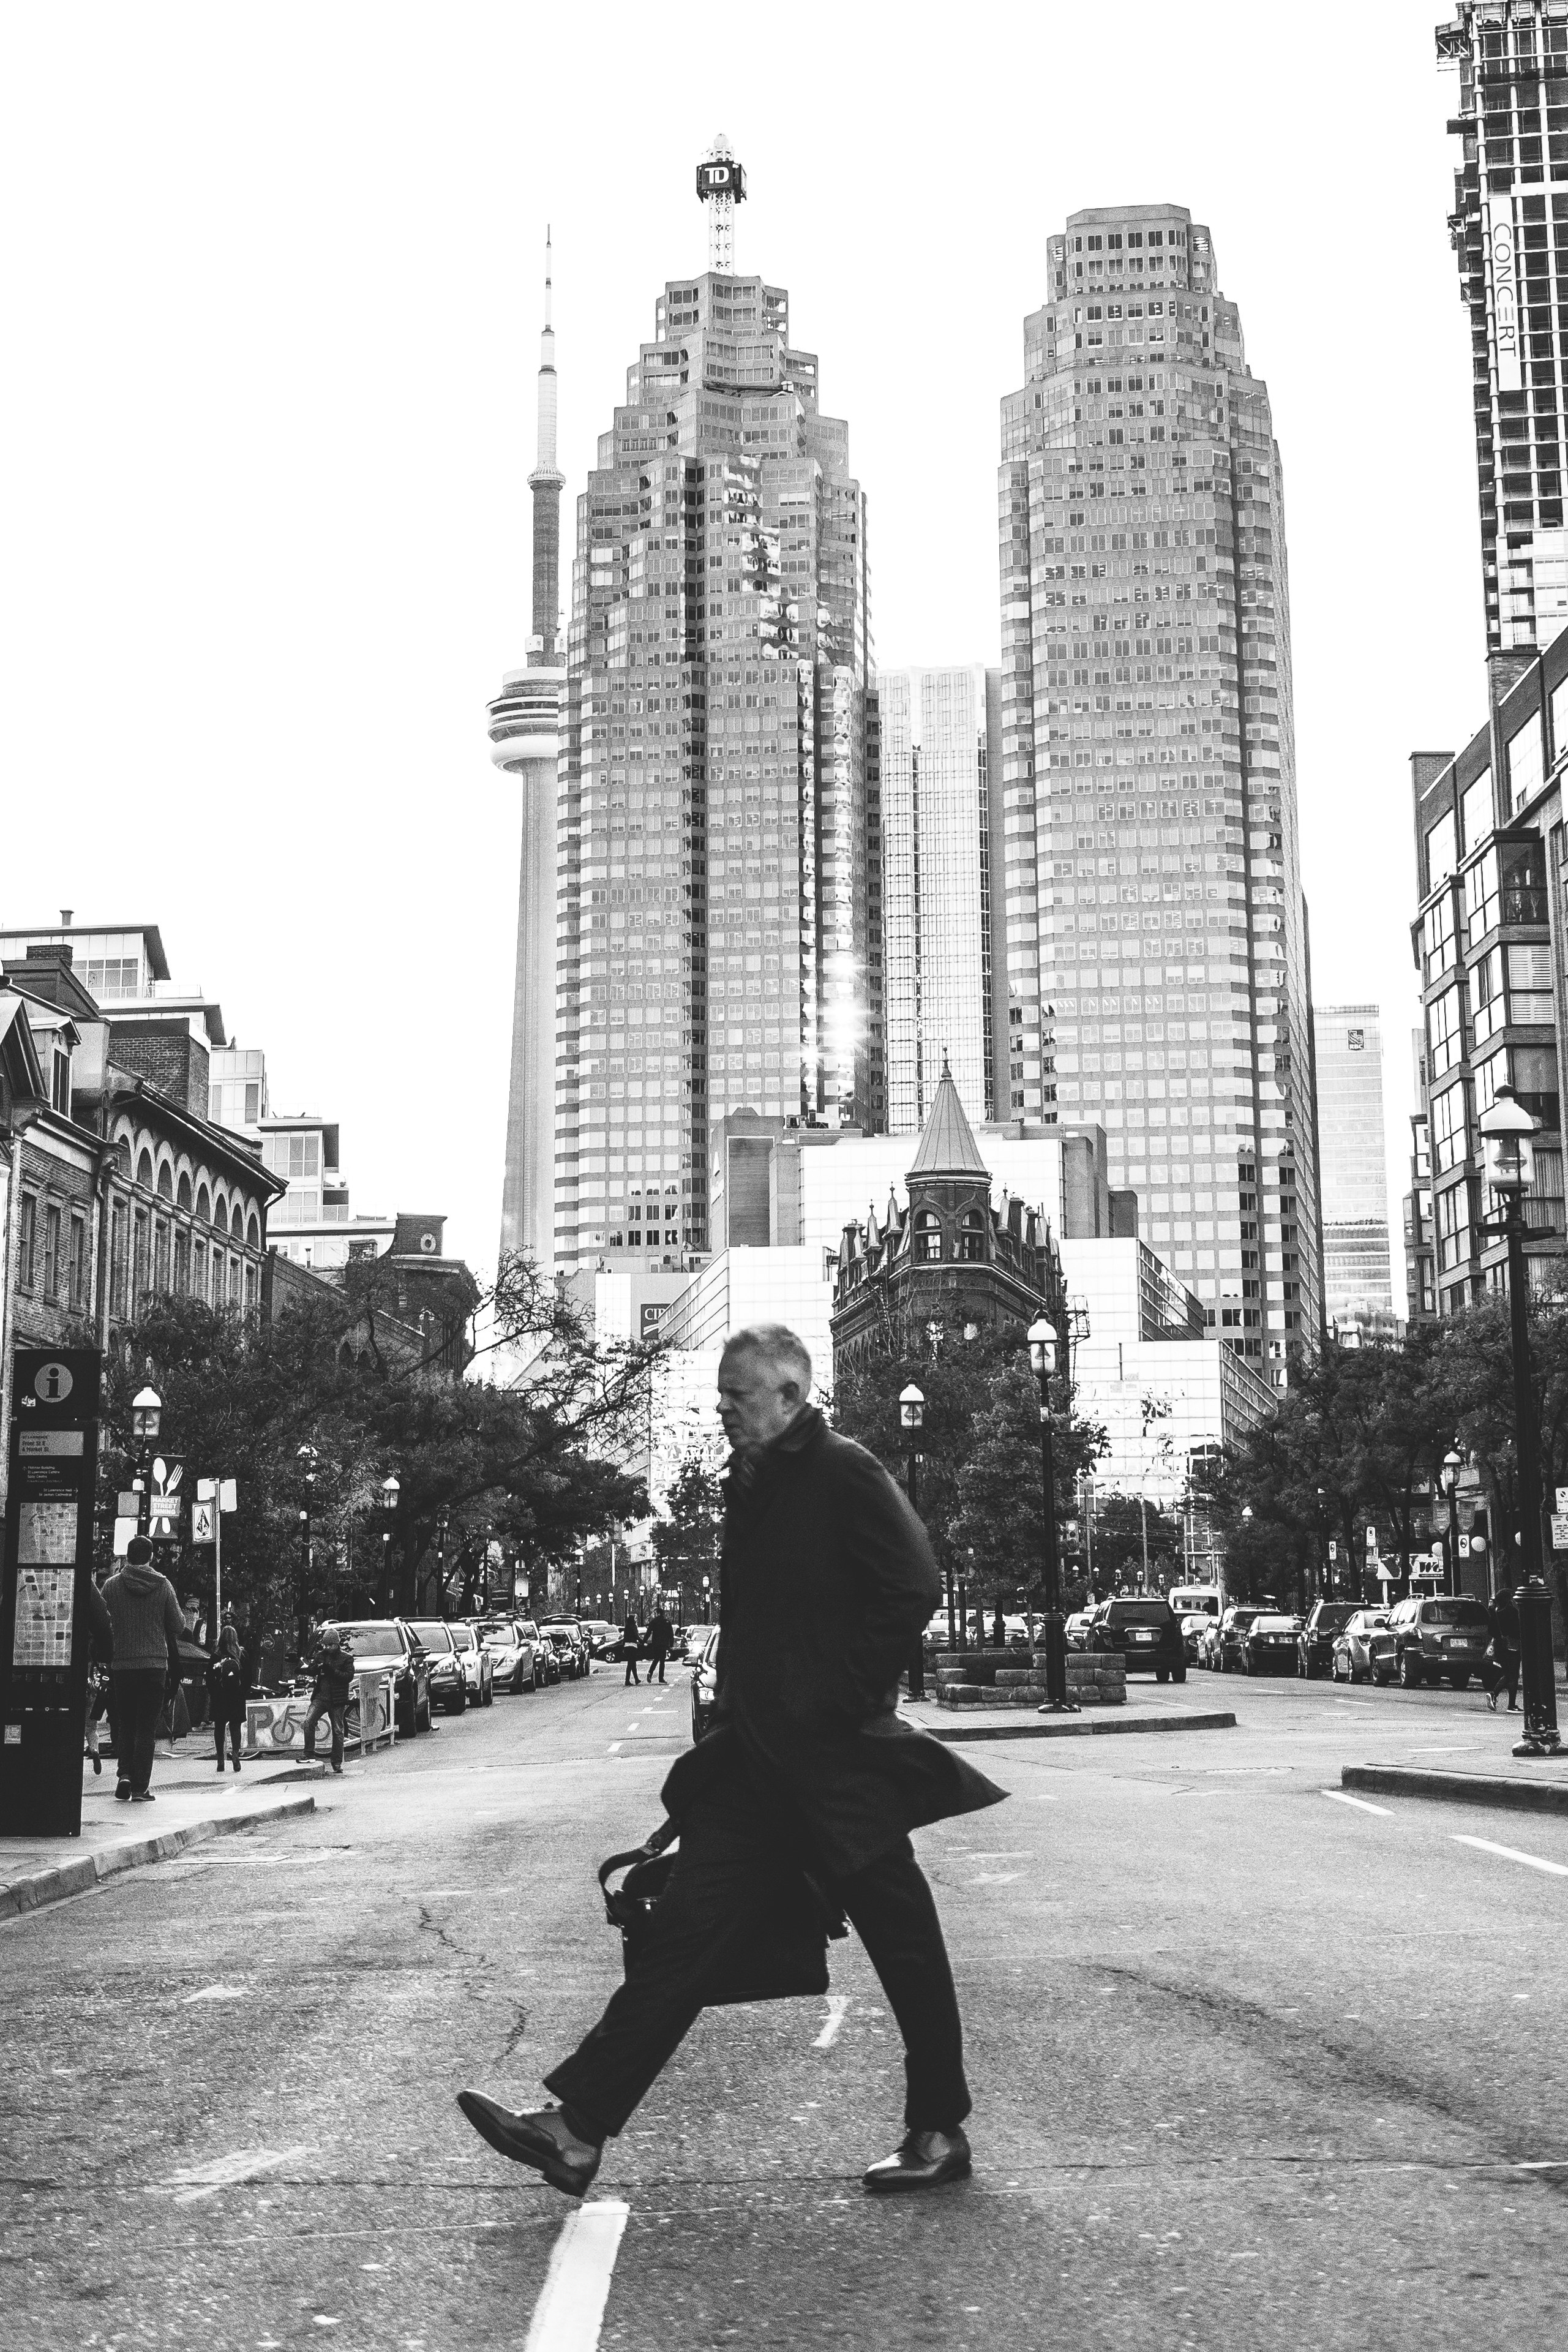 grayscale photo of man sitting on sidewalk near city buildings